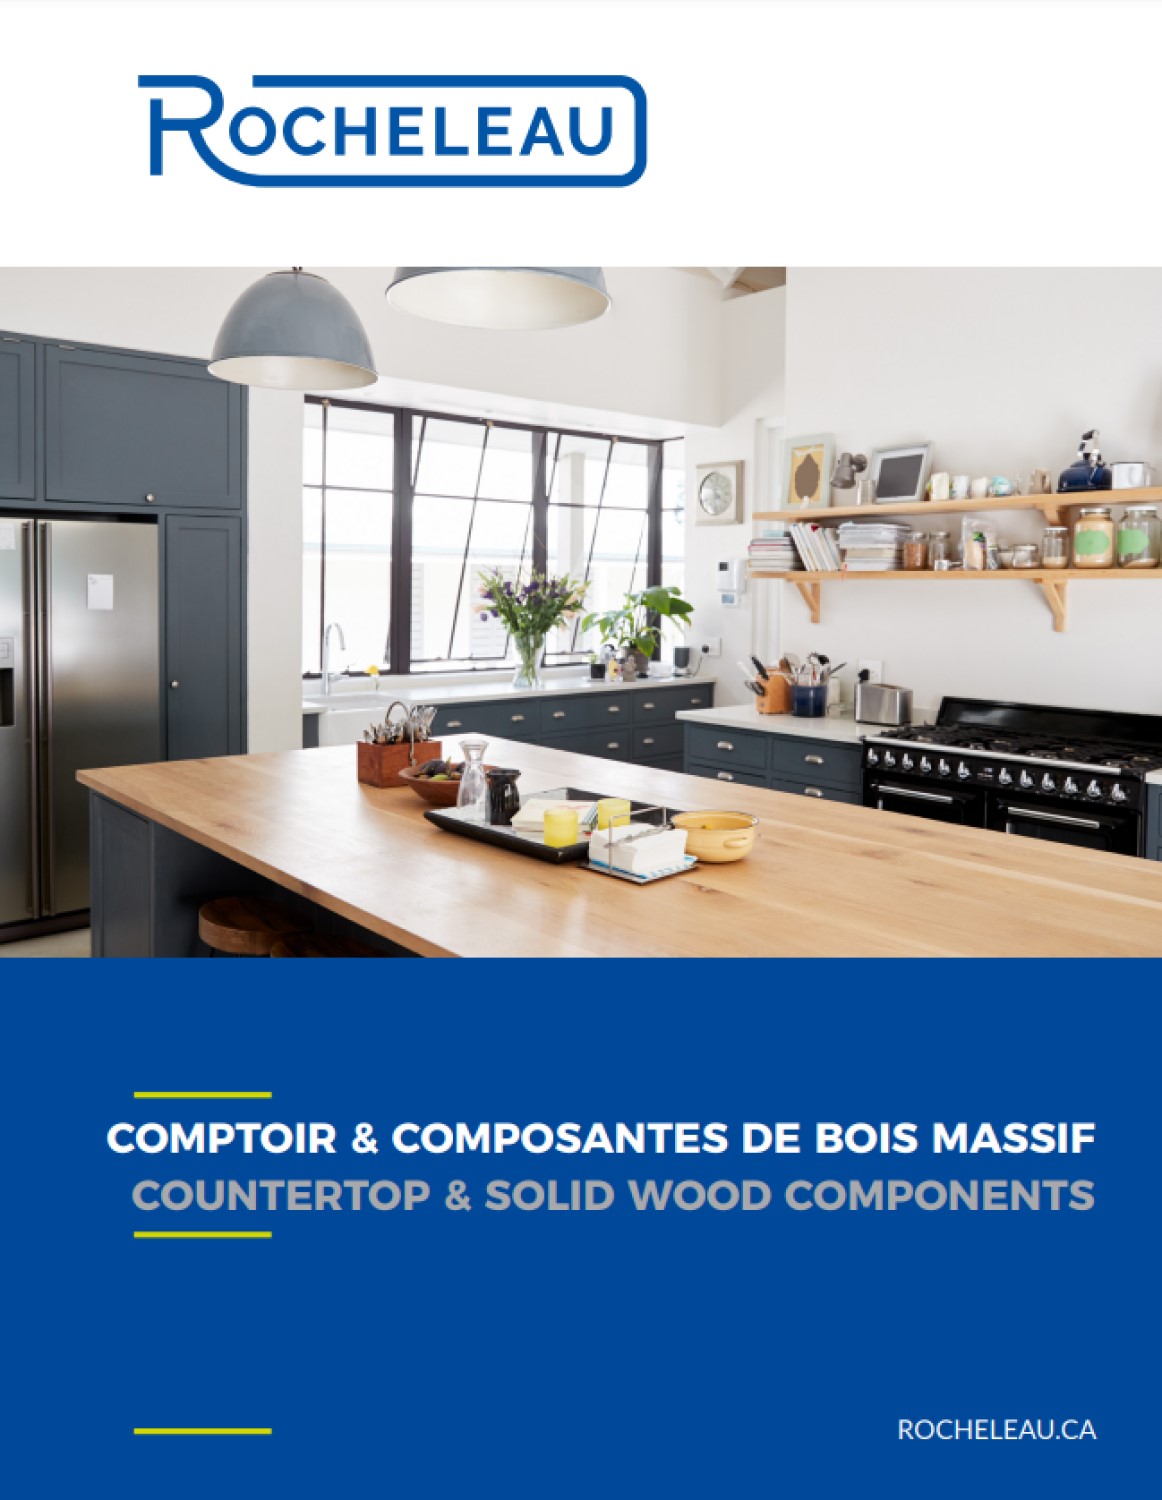 Countertop & solid wood components catalogue